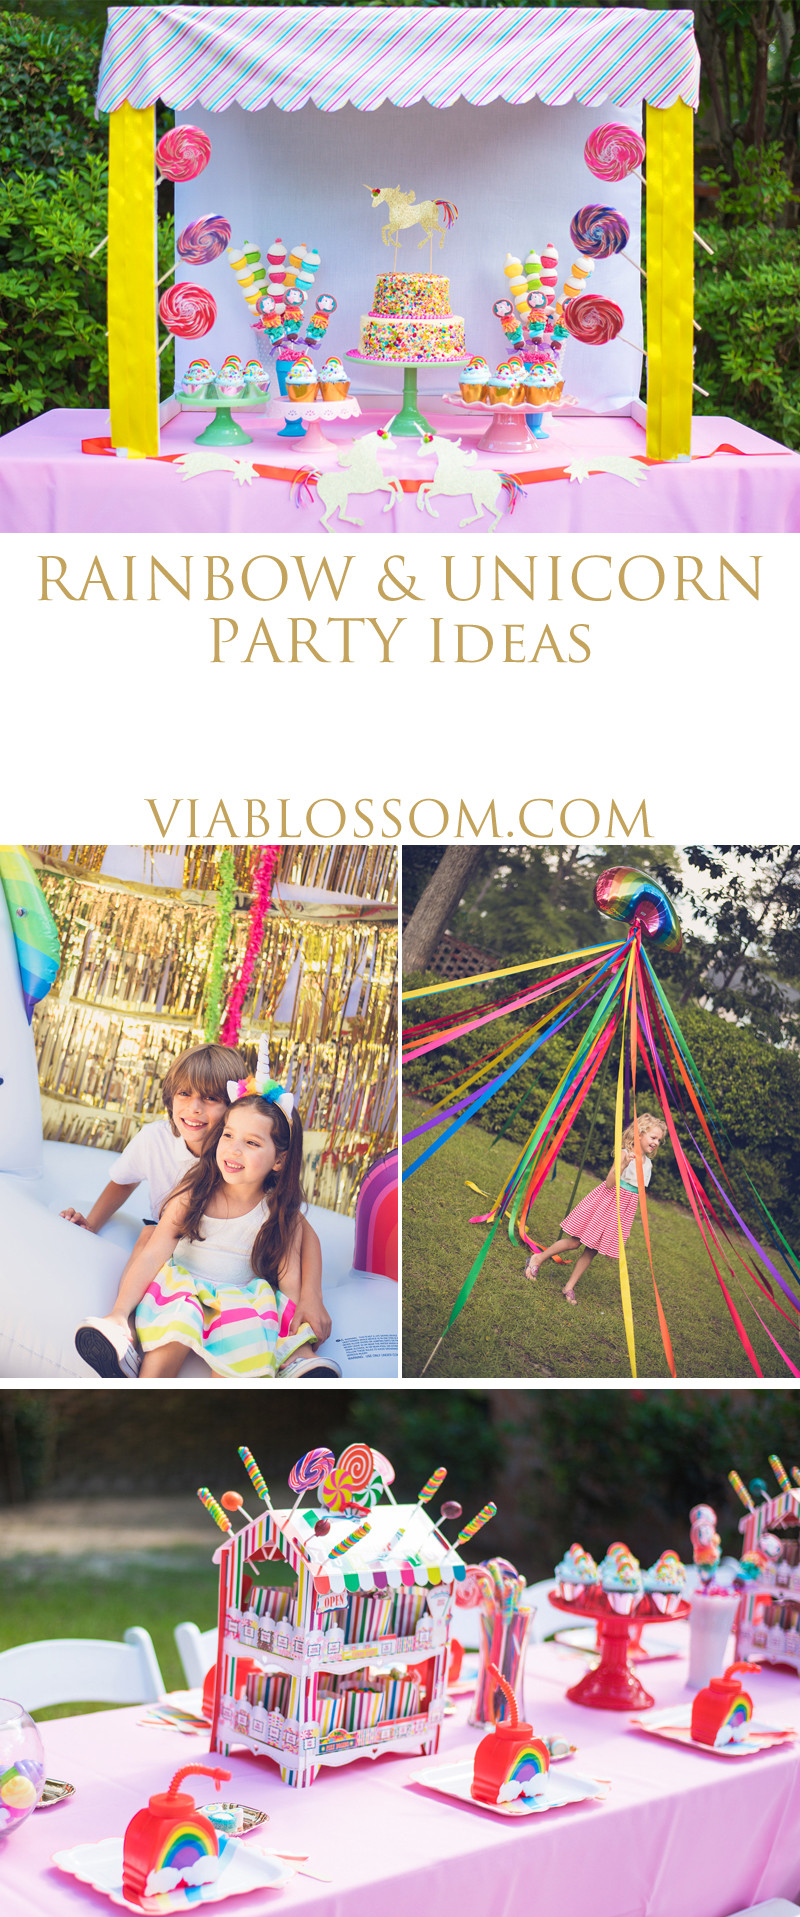 Rainbows And Unicorns Pool Party Ideas
 Rainbow and Unicorn Birthday Party Via Blossom